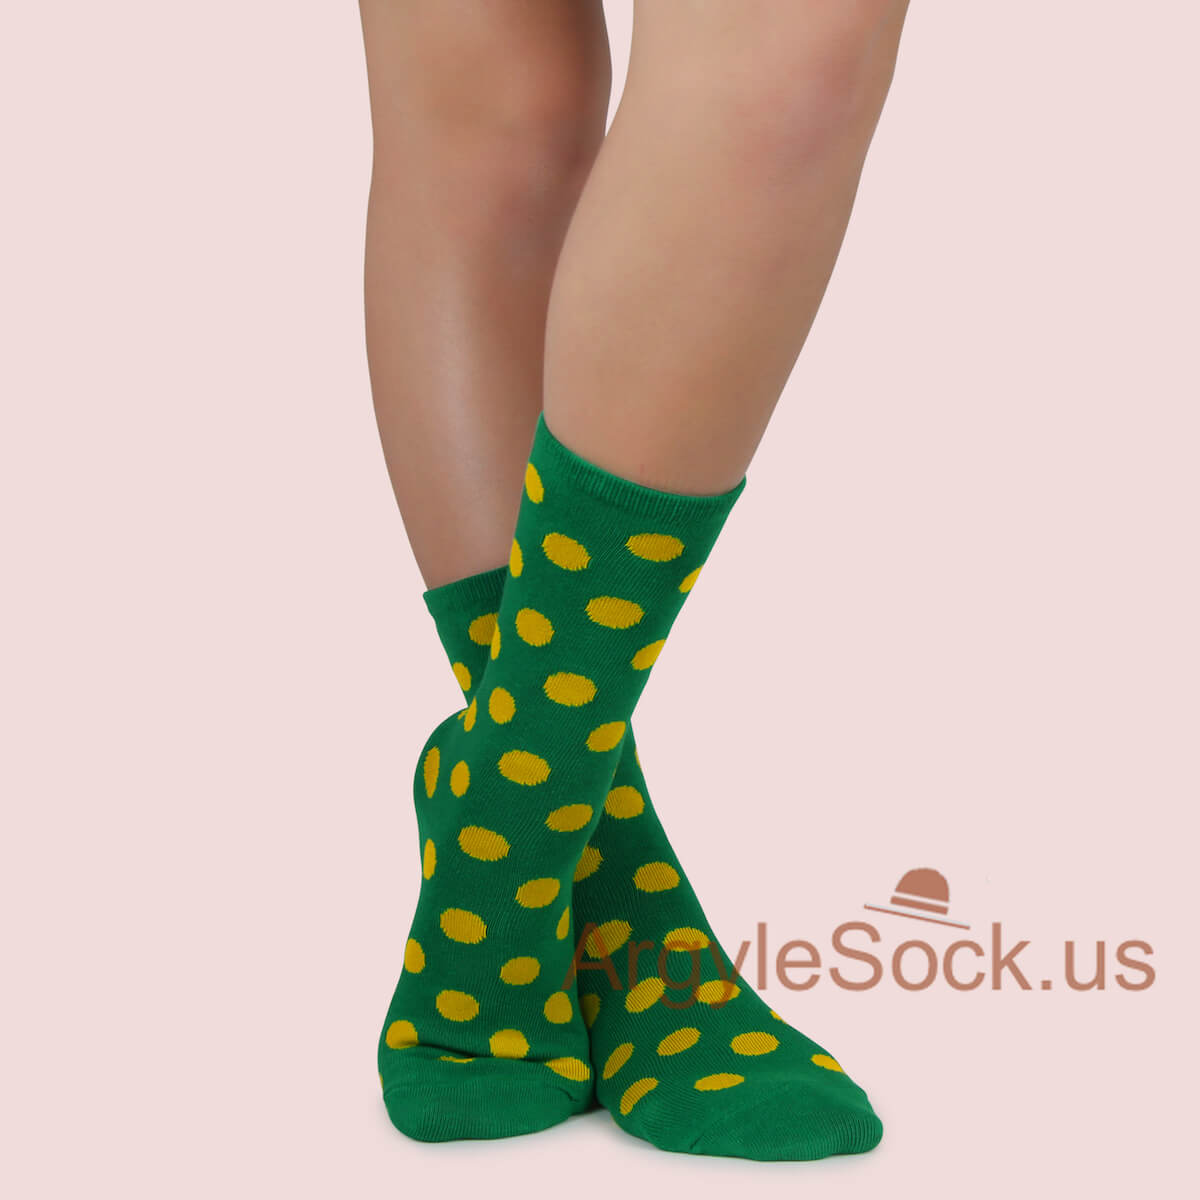 Green with Yellow Polka dots Junior Groomsmen/Ring Bearer Socks